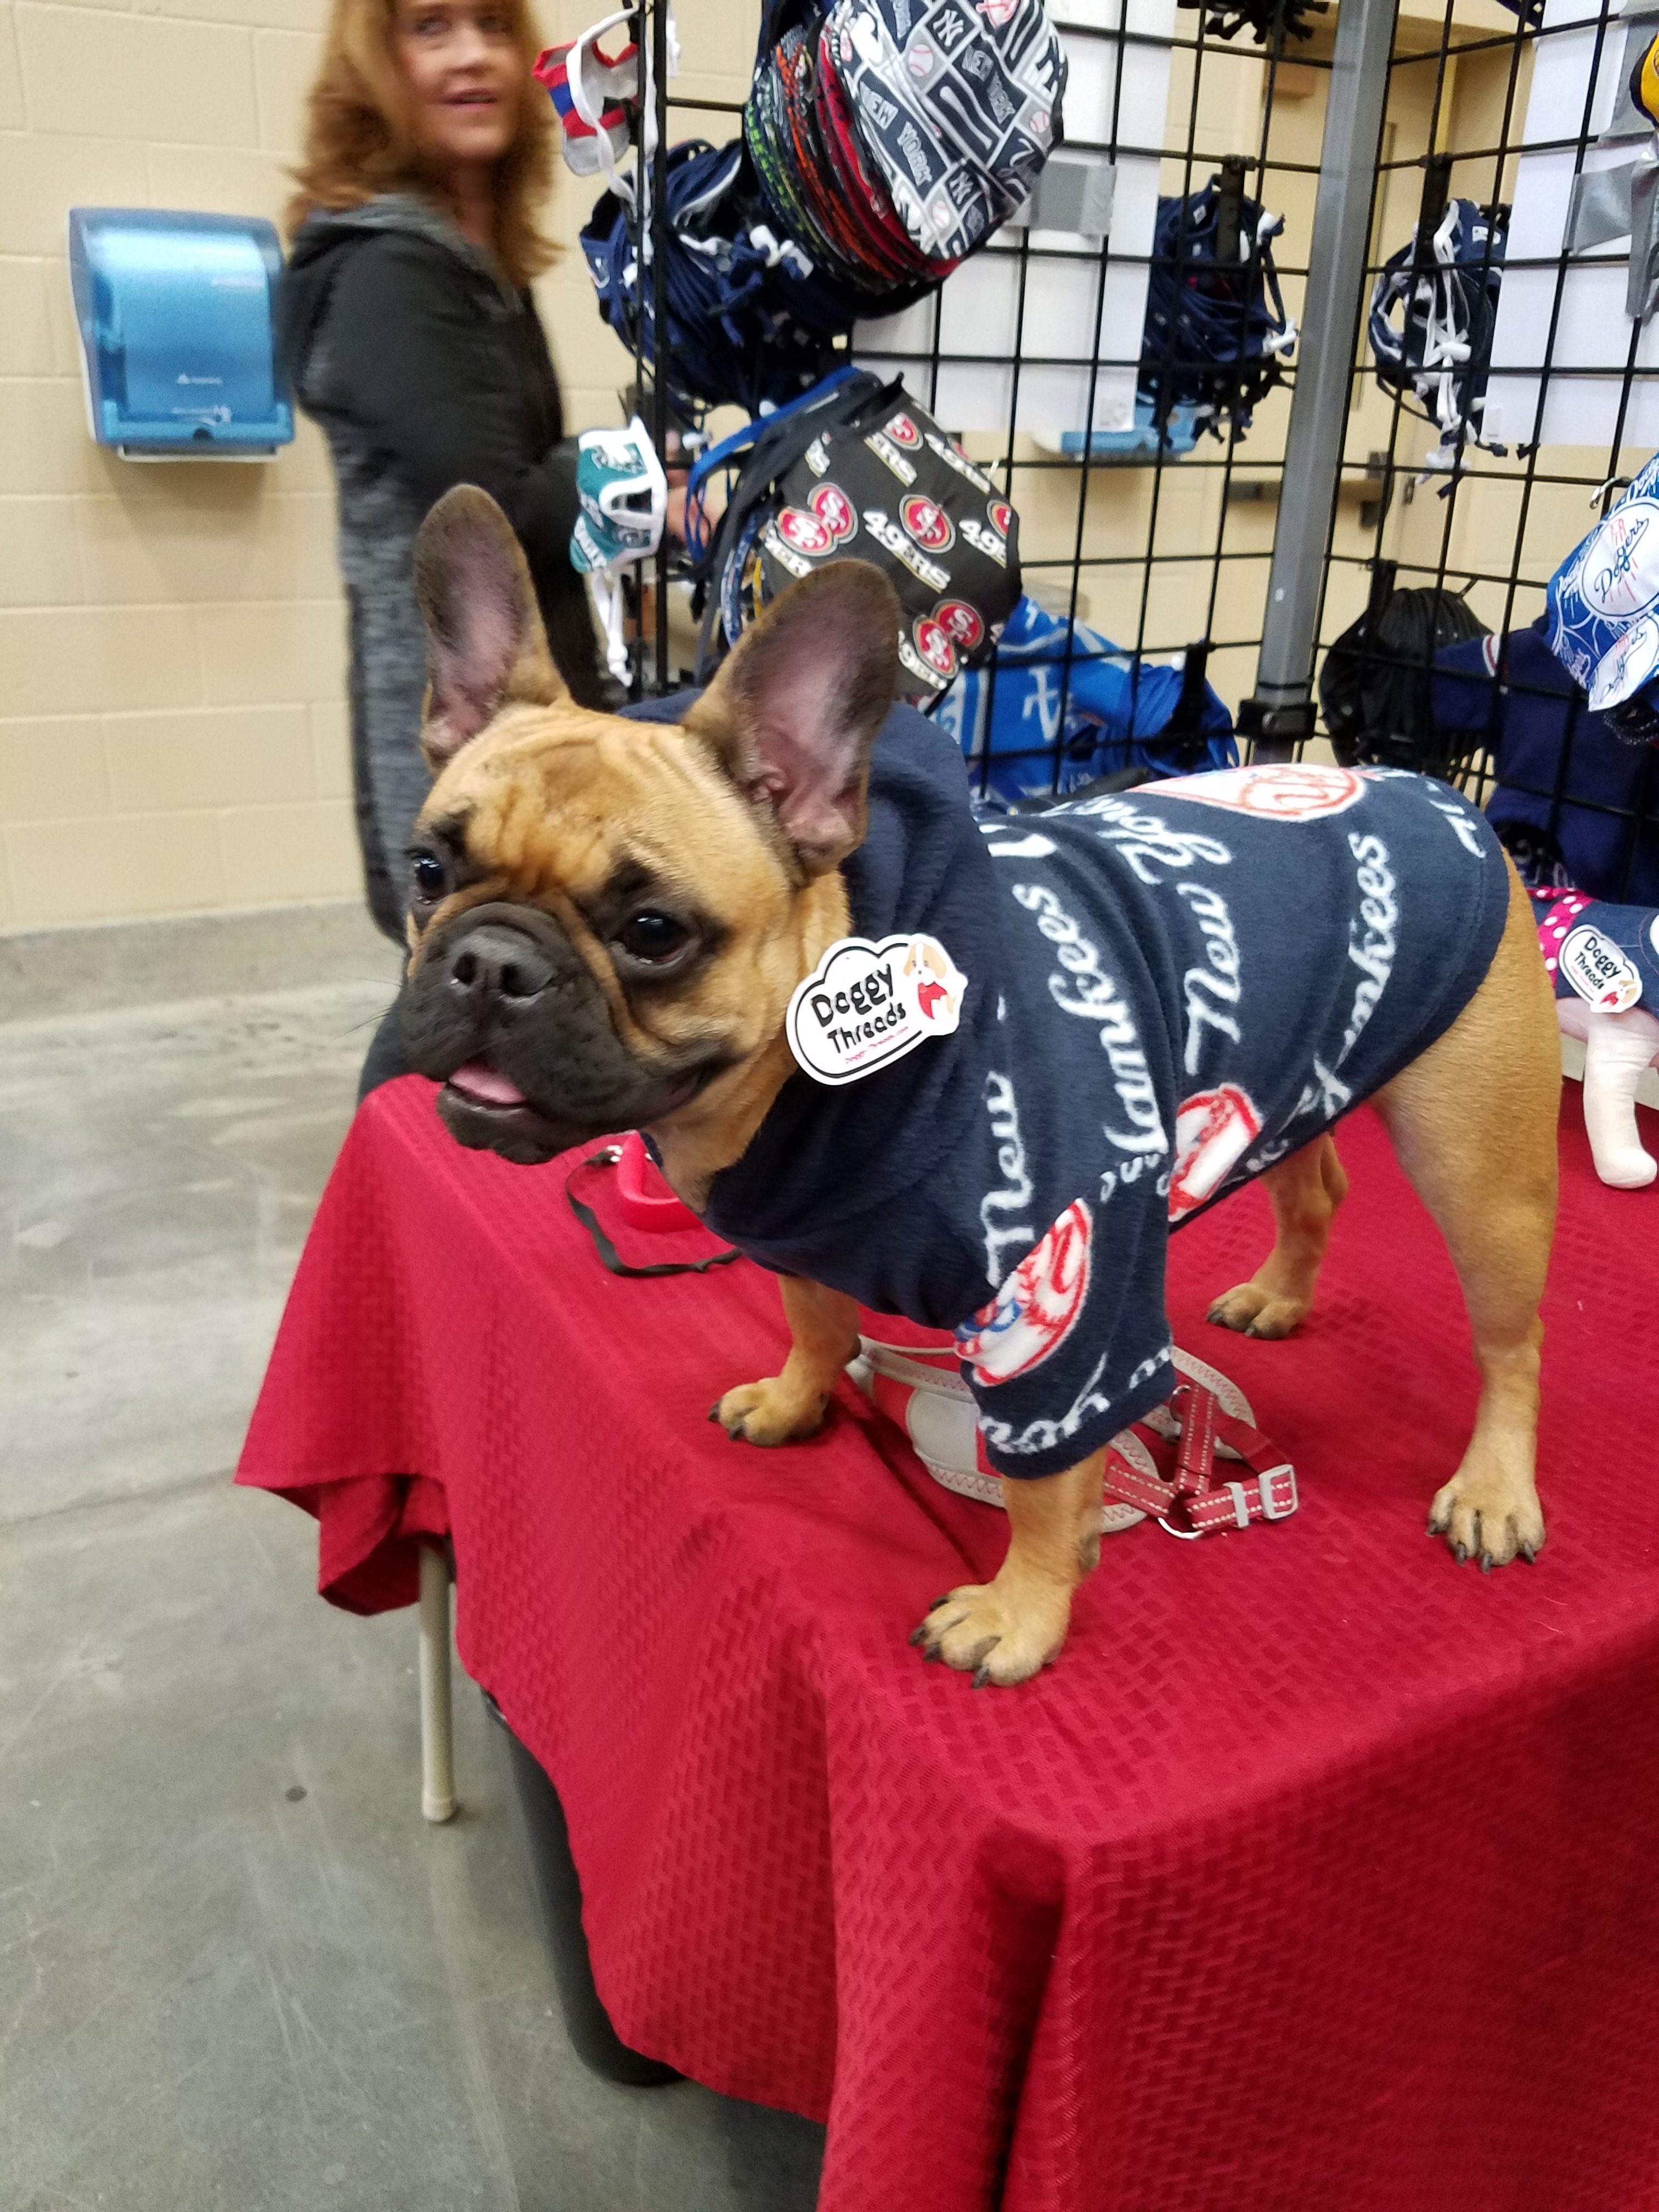 Dog Hat - Yankees Sports Fabric